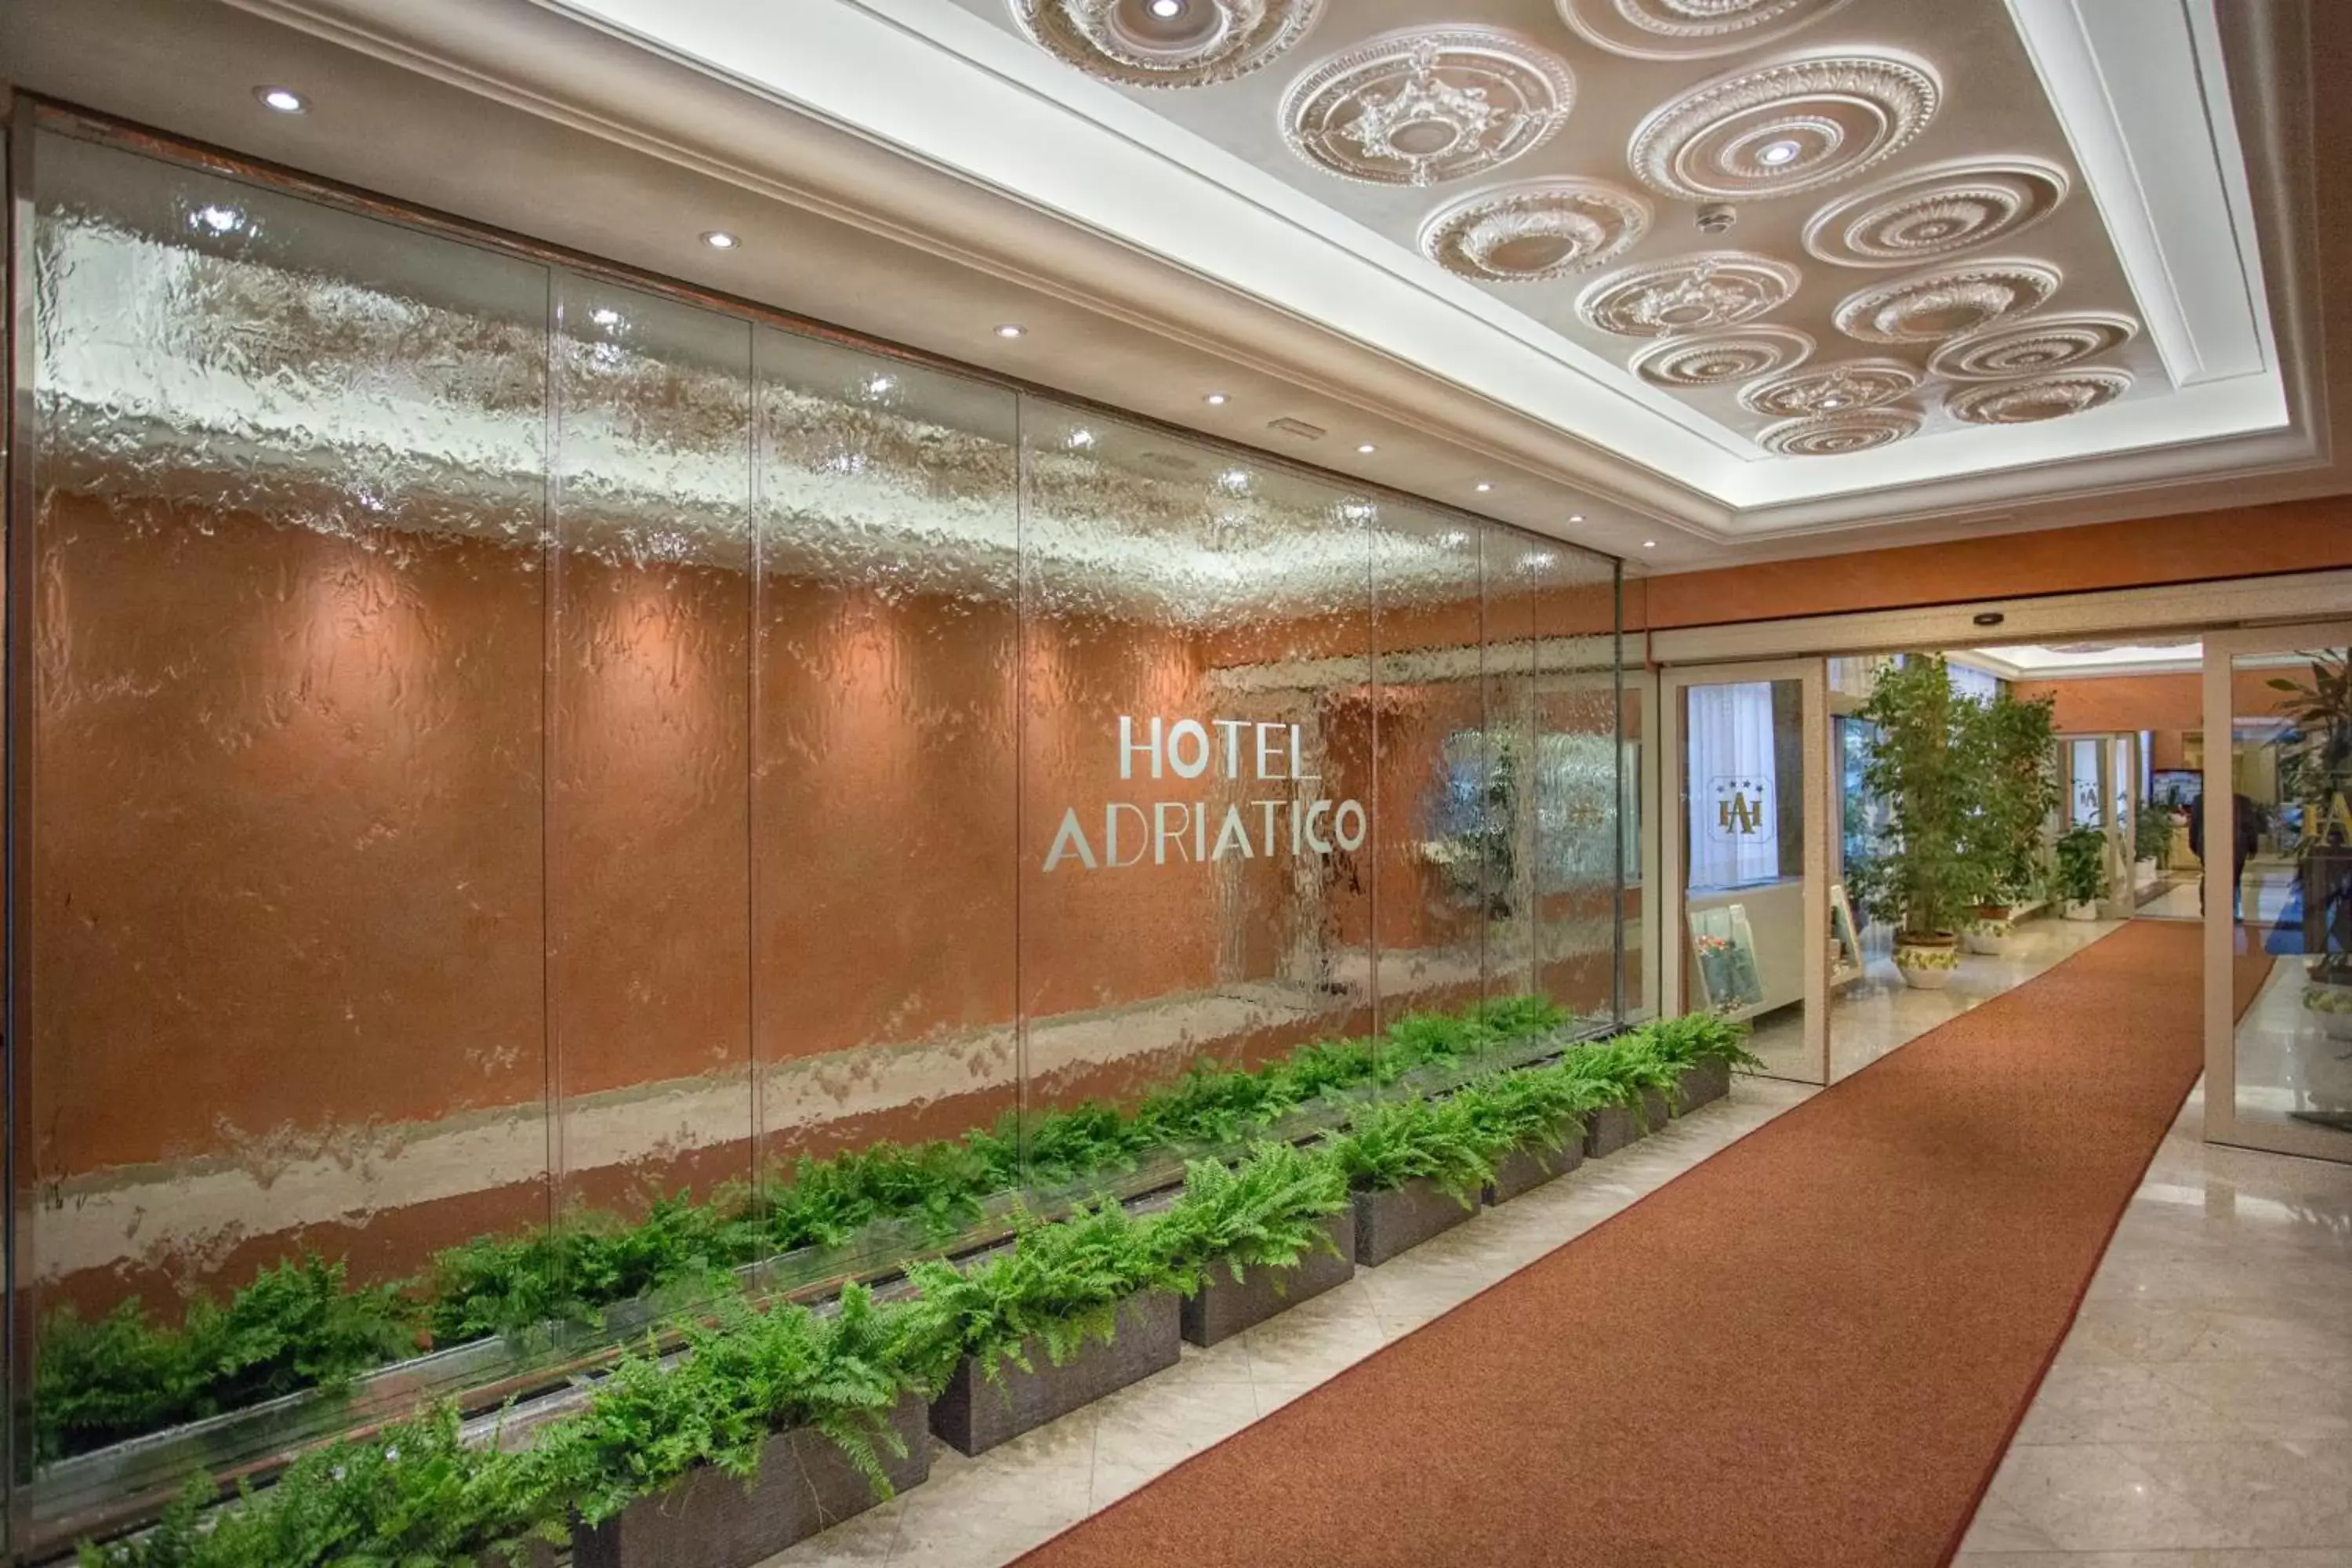 Lobby or reception in Grand Hotel Adriatico